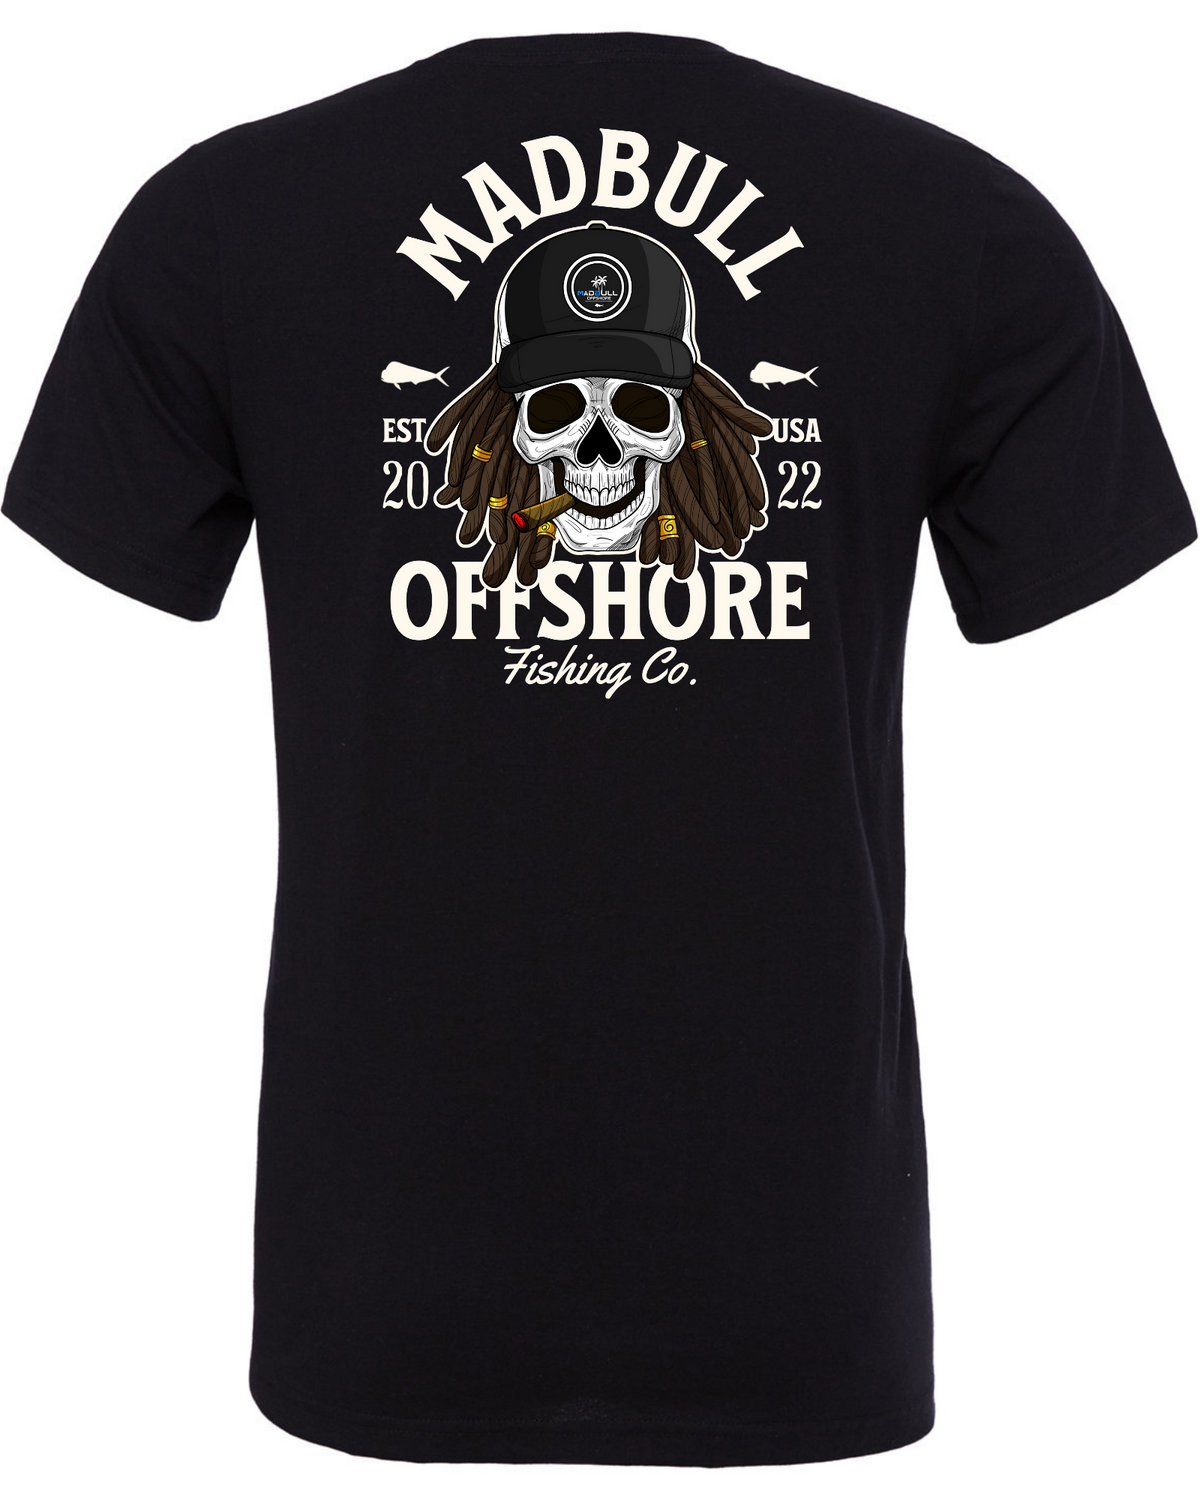 MadBull Offshore Gear  Fishing Shirts, Performance Shirts & Headwear